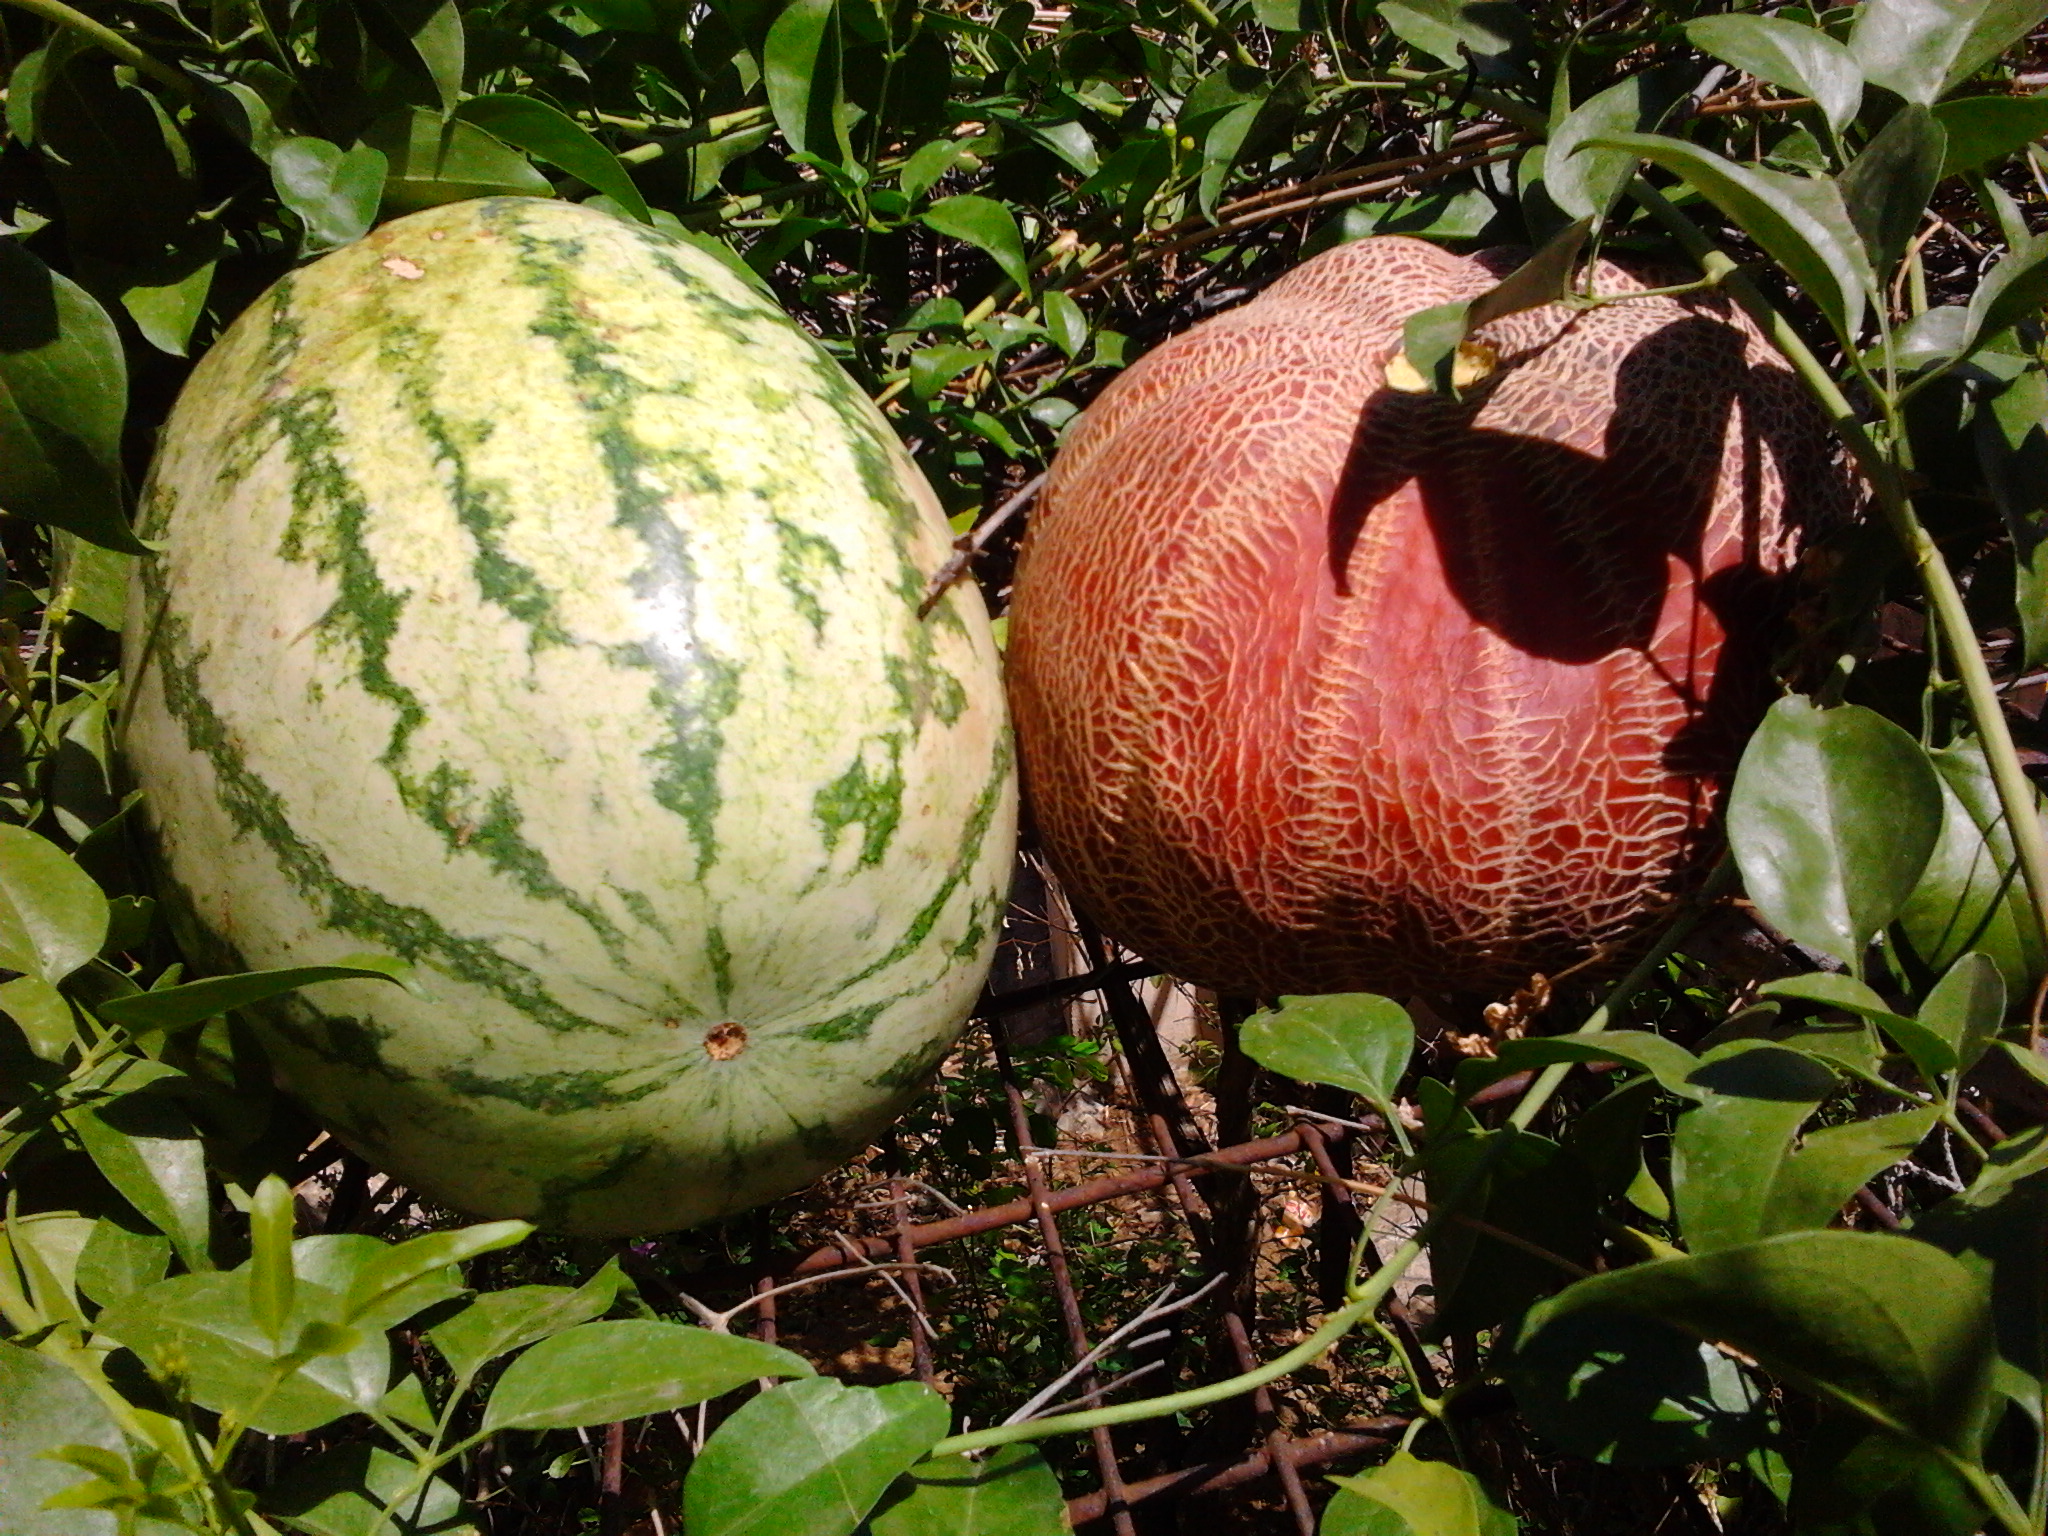 melons growing in las vegas heat